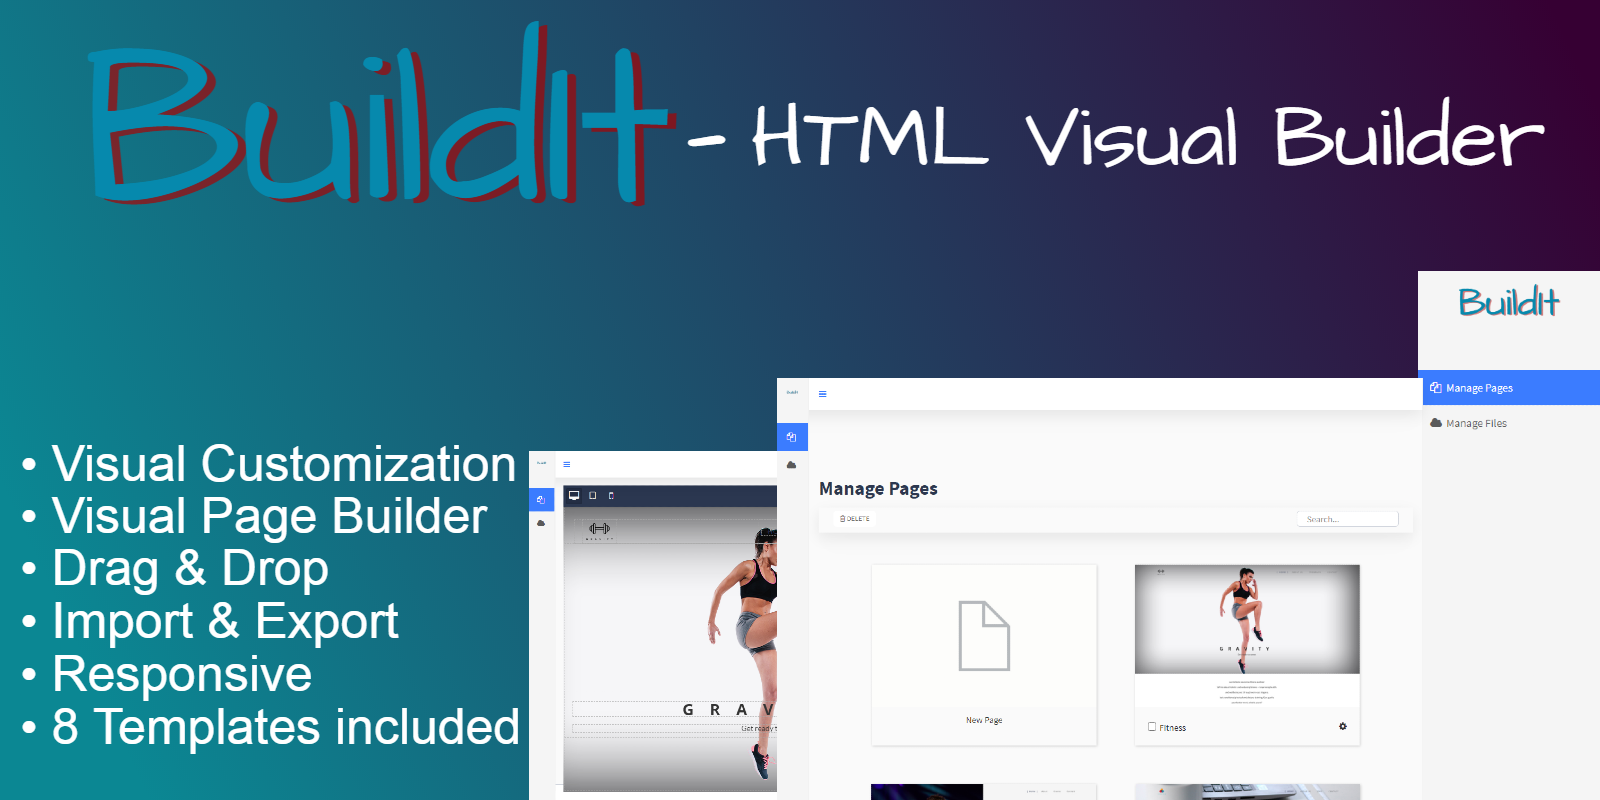 BuildIt - HTML Visual Builder